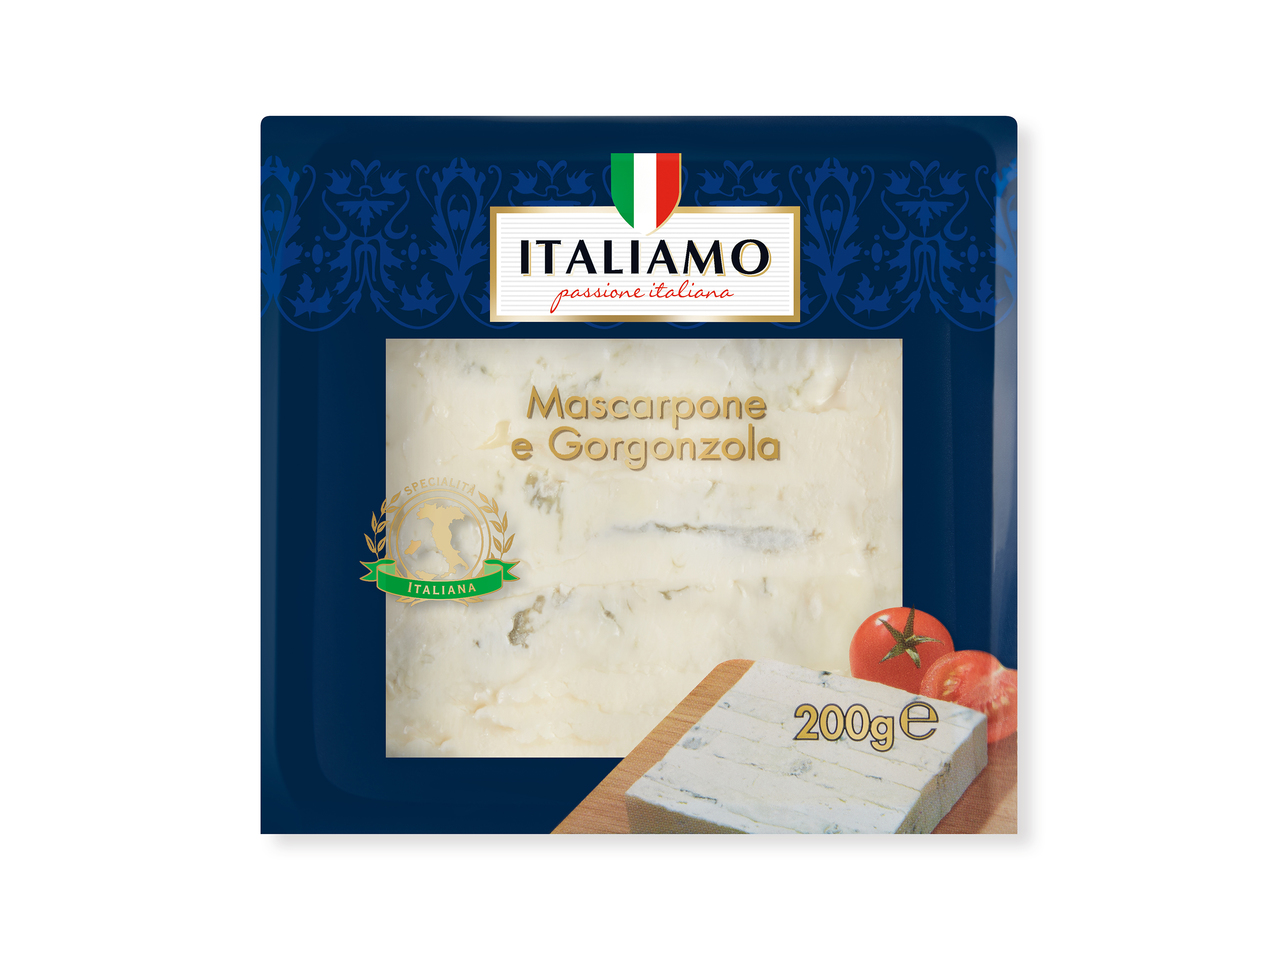 "ITALIAMO" Mascarpone-gorgonzola